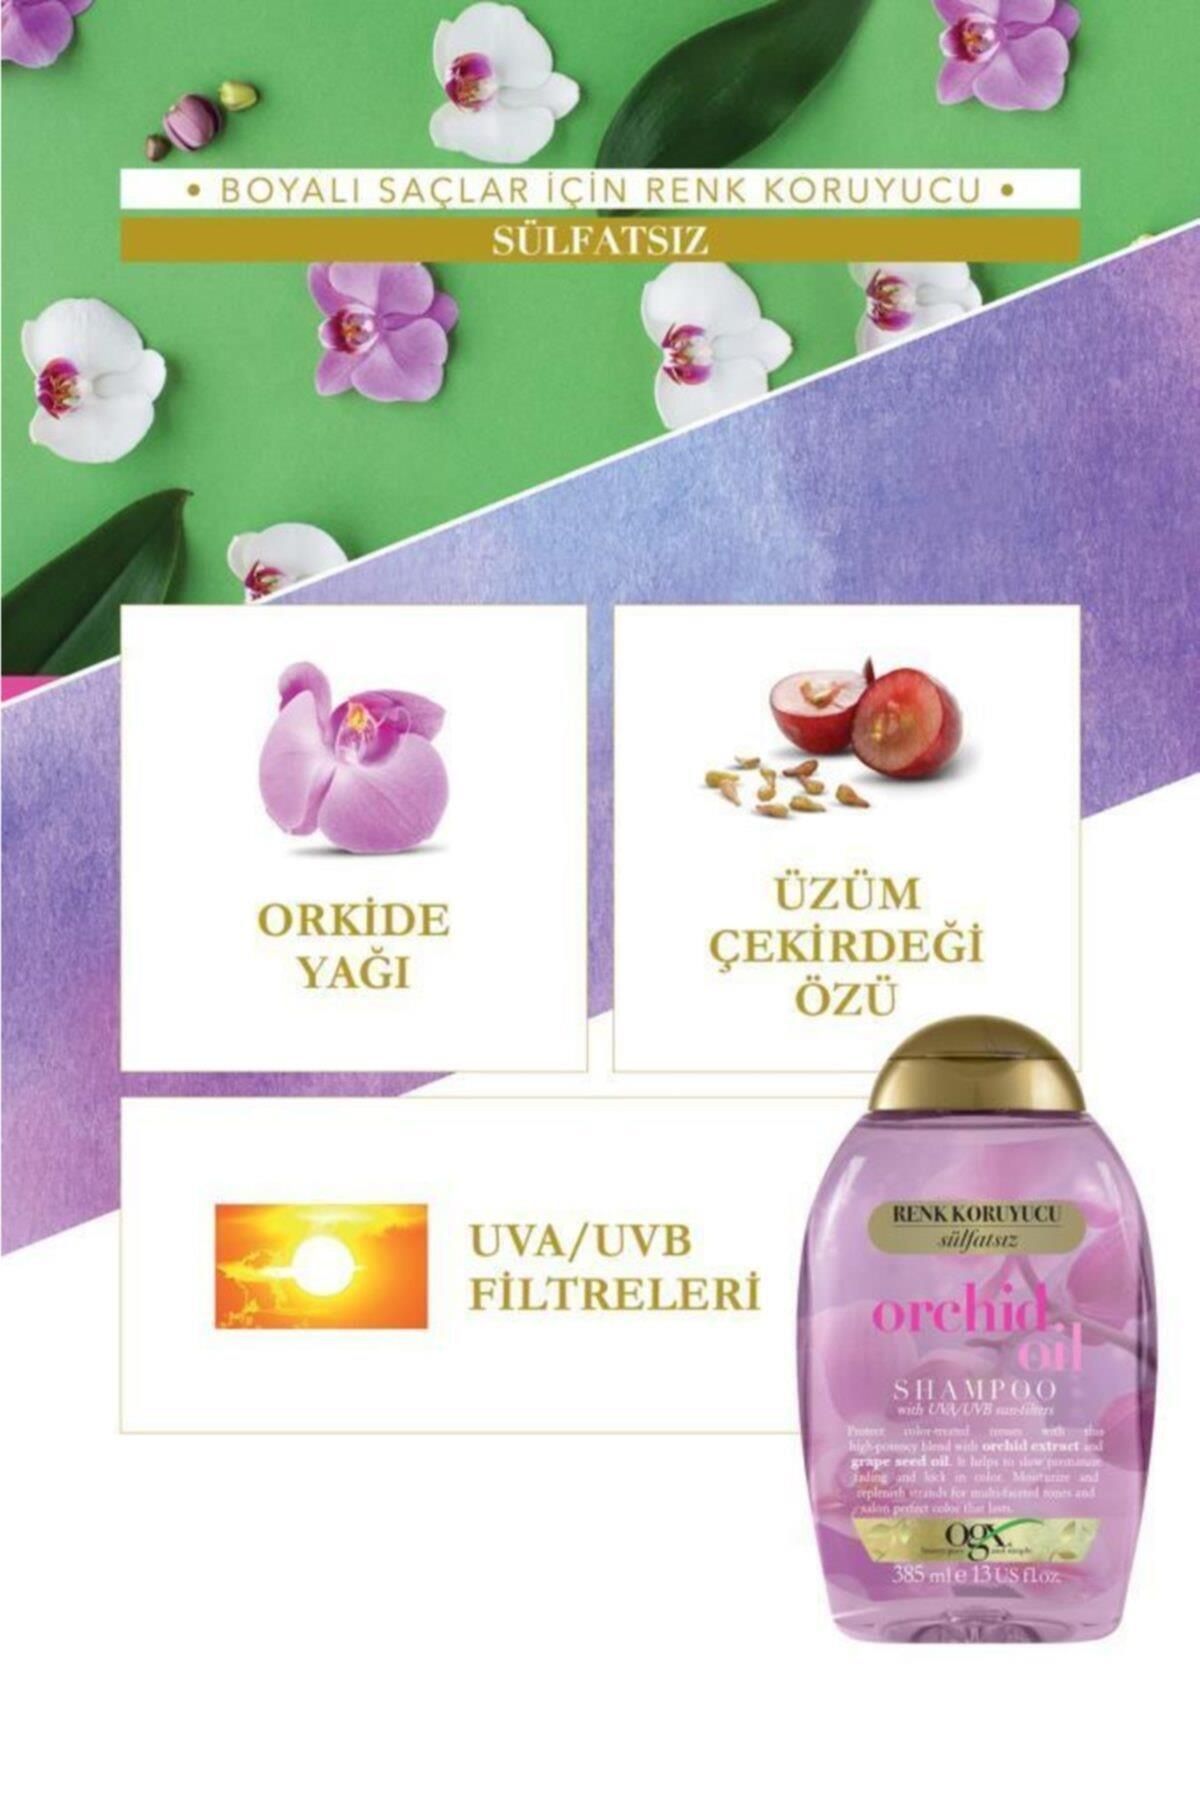 OGX  orchid Oil Sülfatsız Şampuan 385 ml